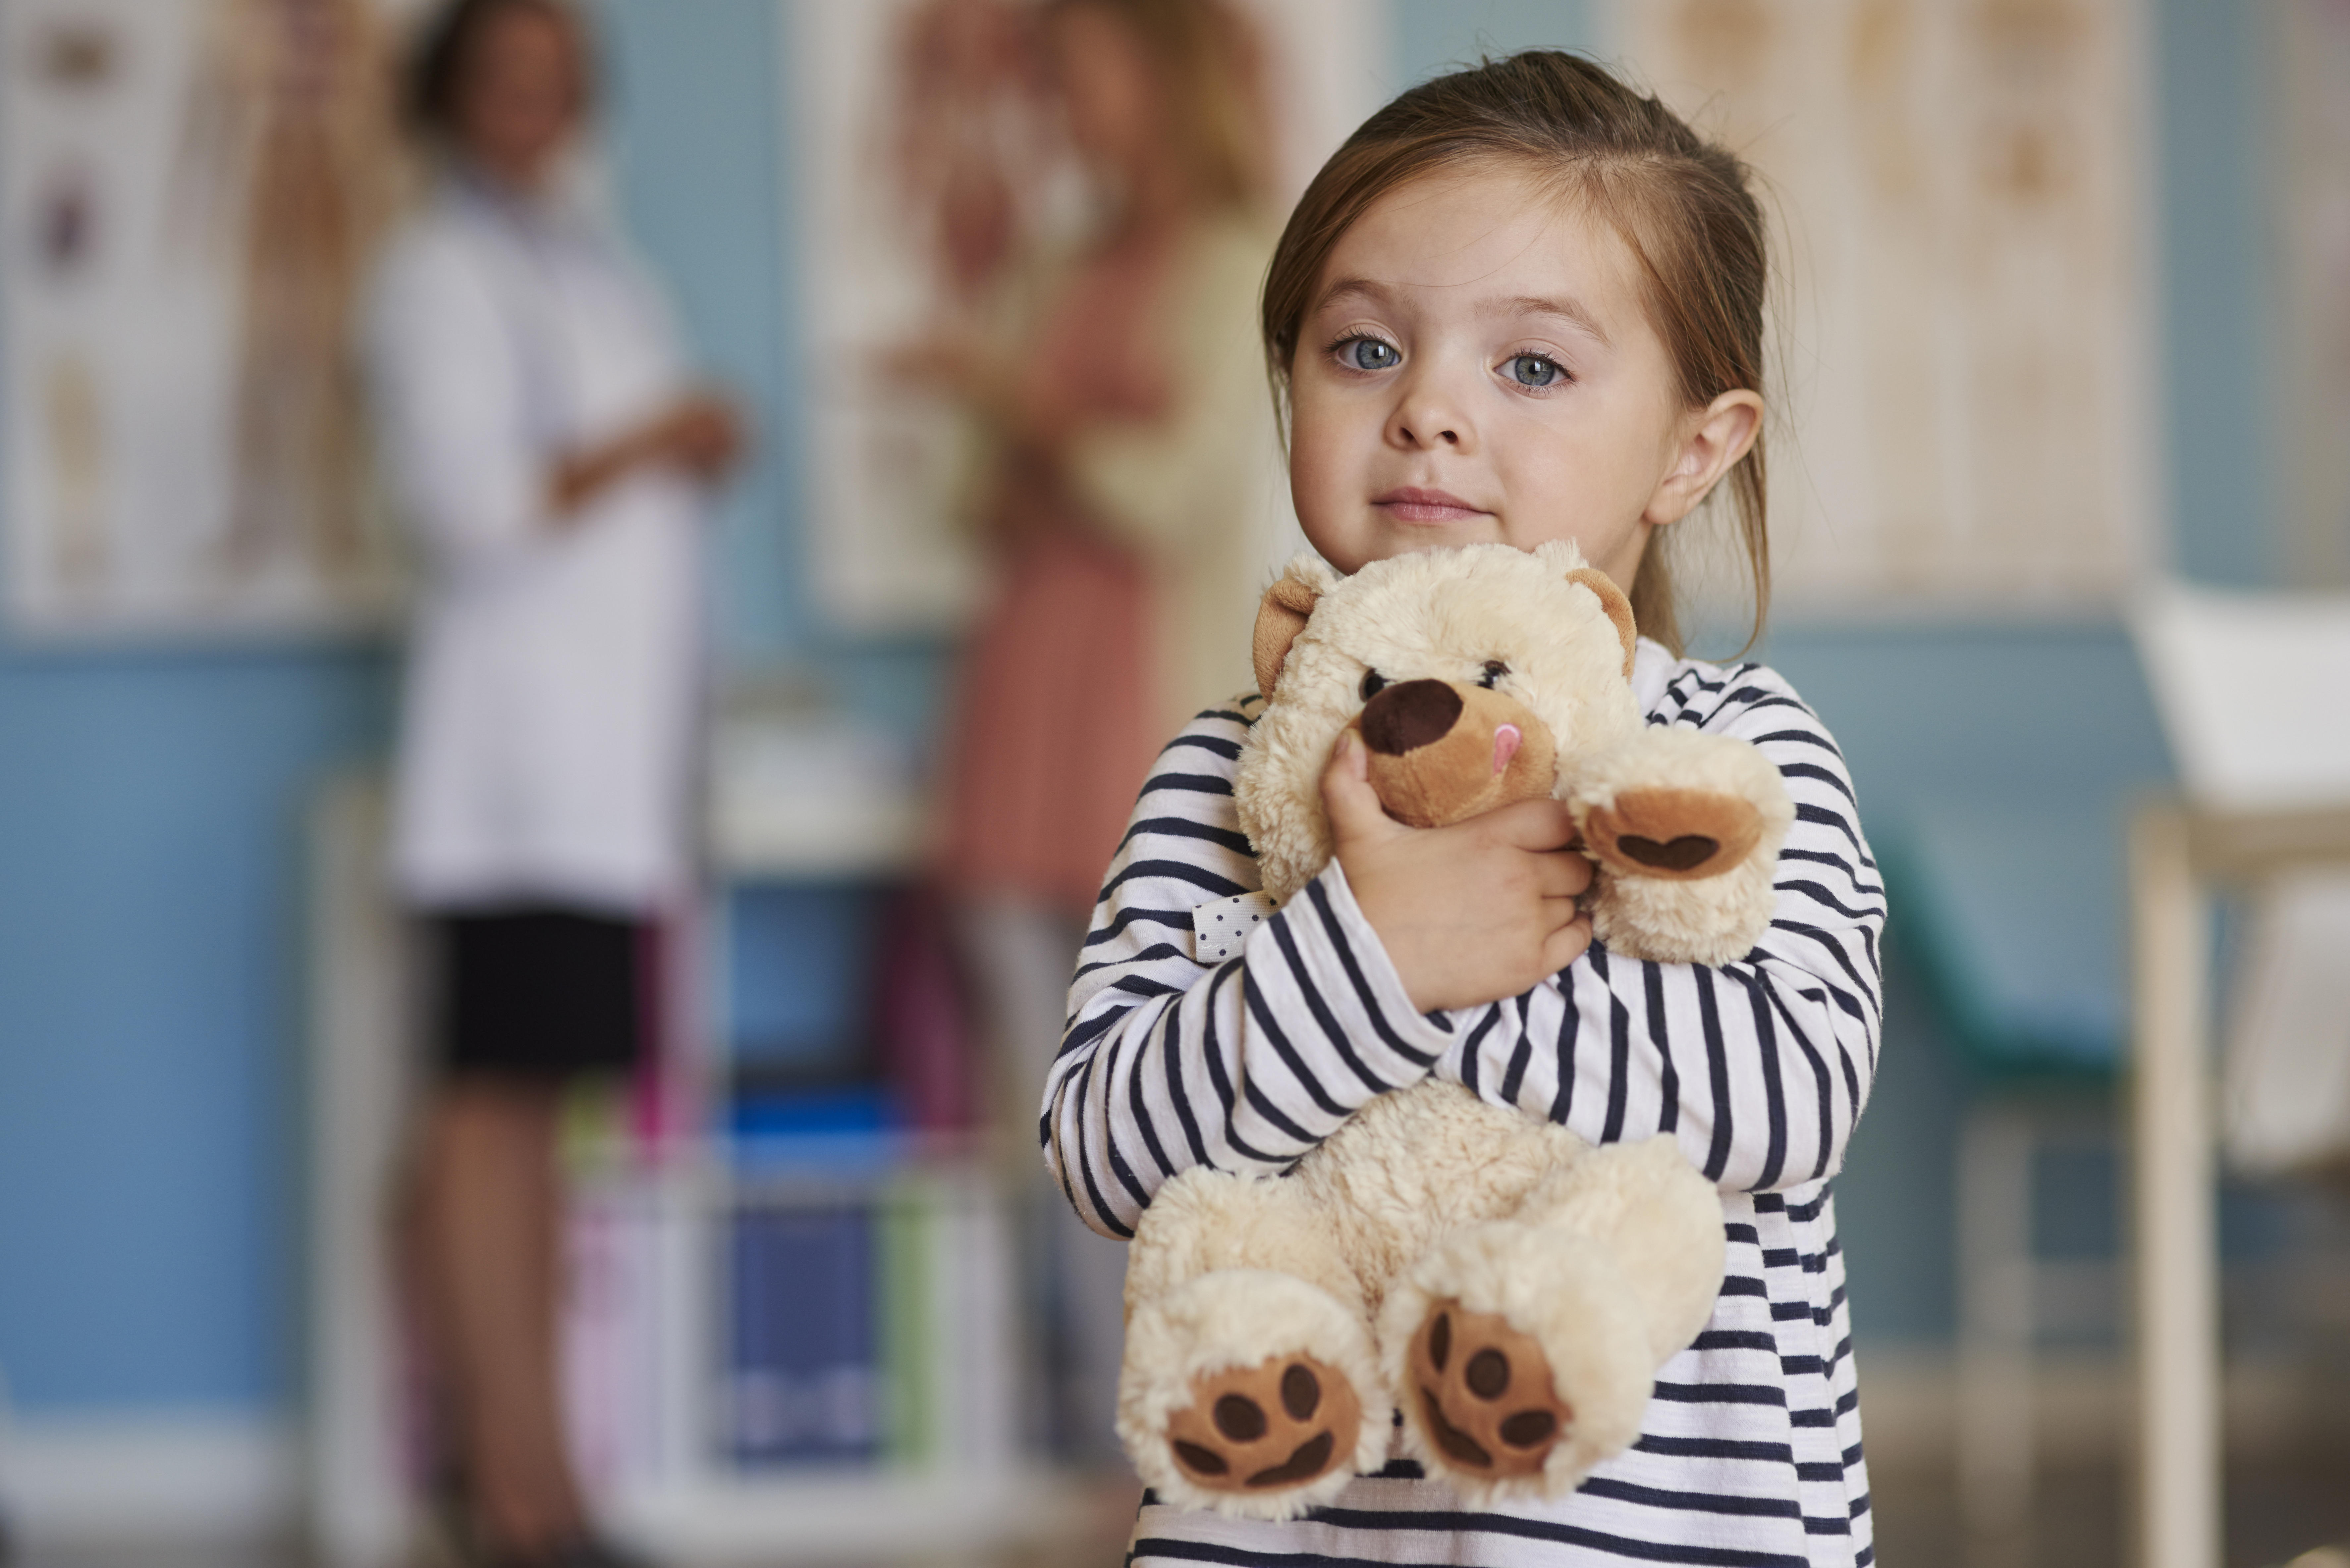 Child holding stuffed animal in hospital setting